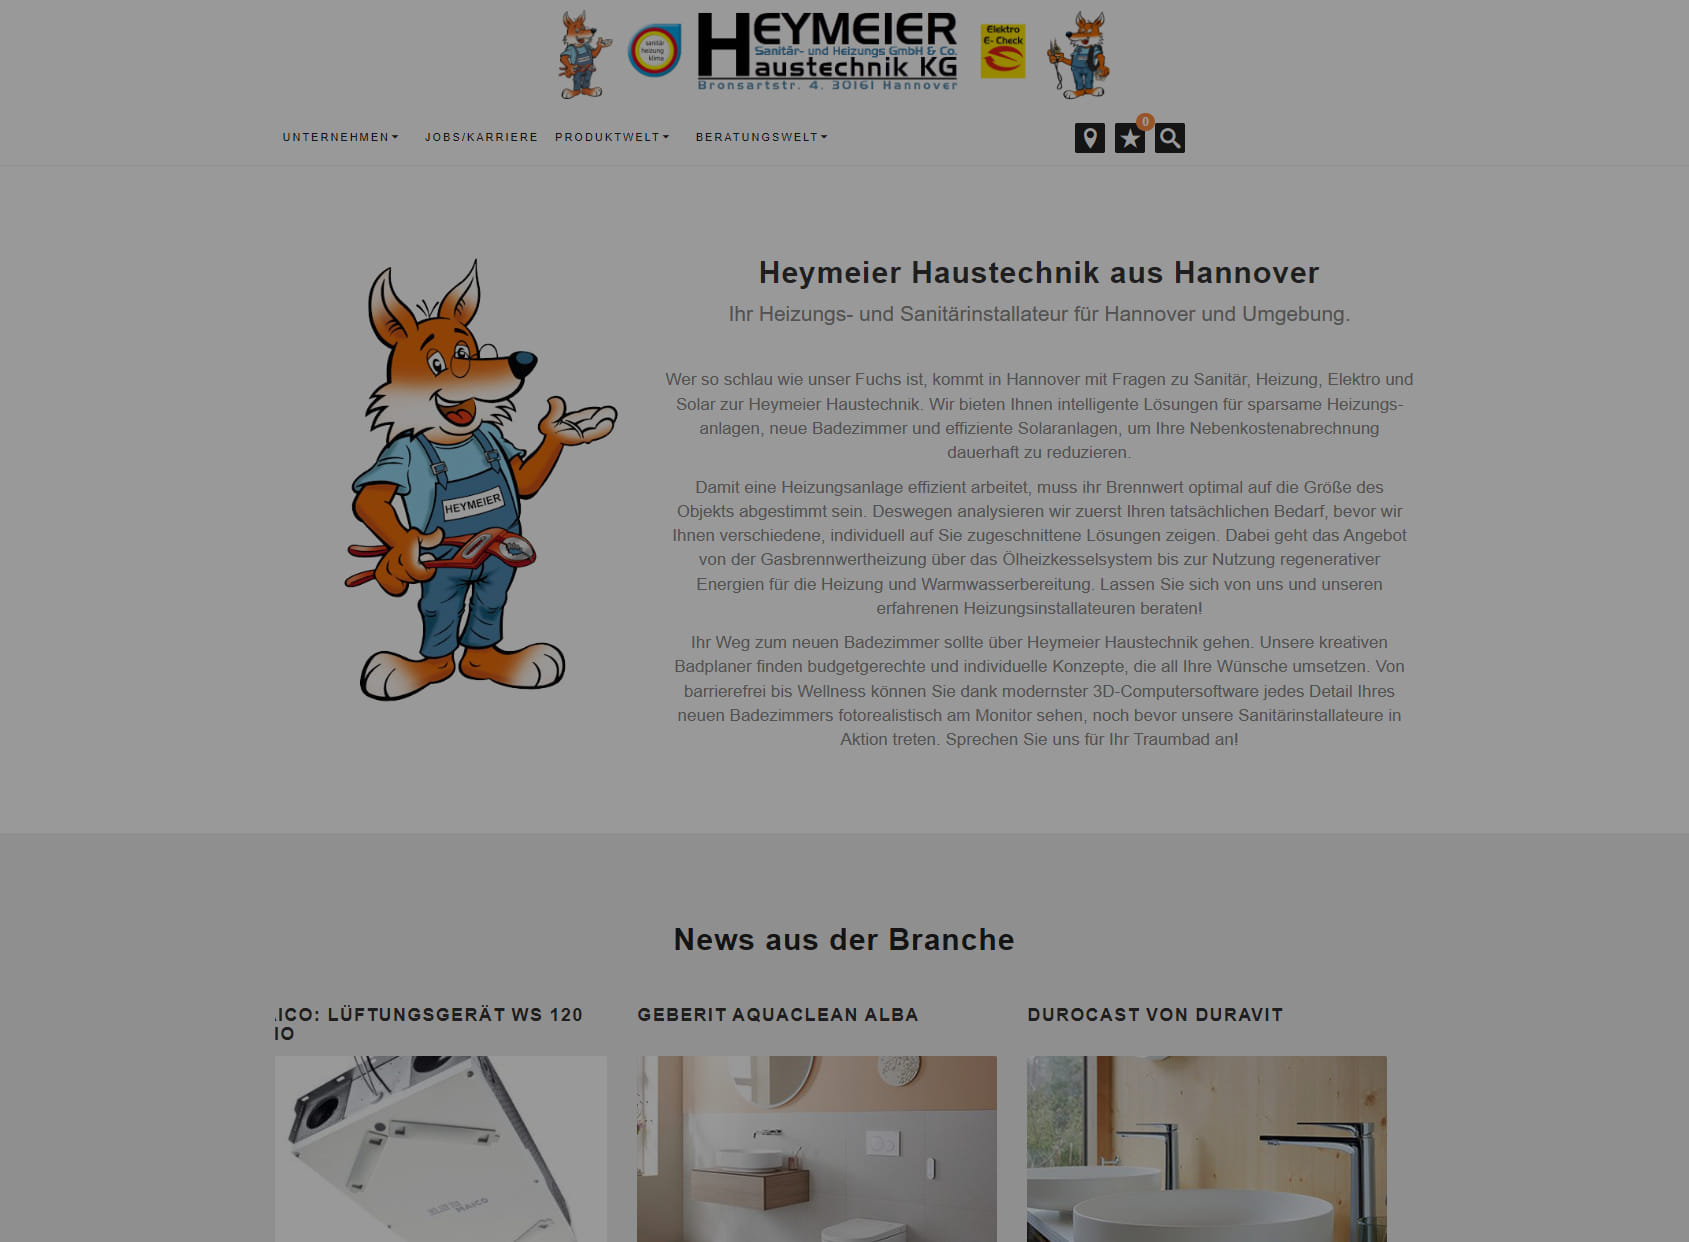 Heymeier GmbH & Co. KG building services